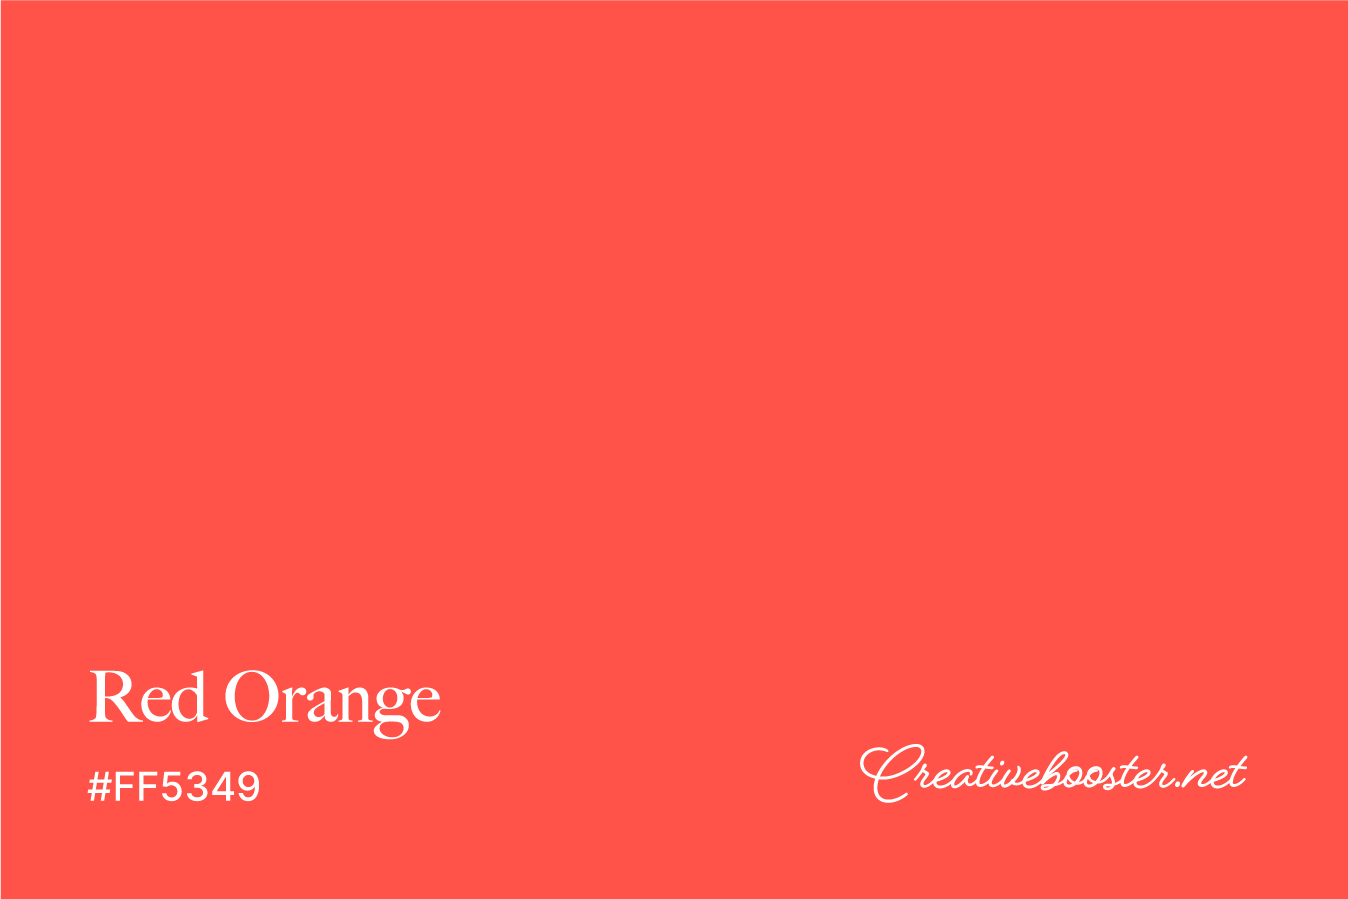 reddish orange